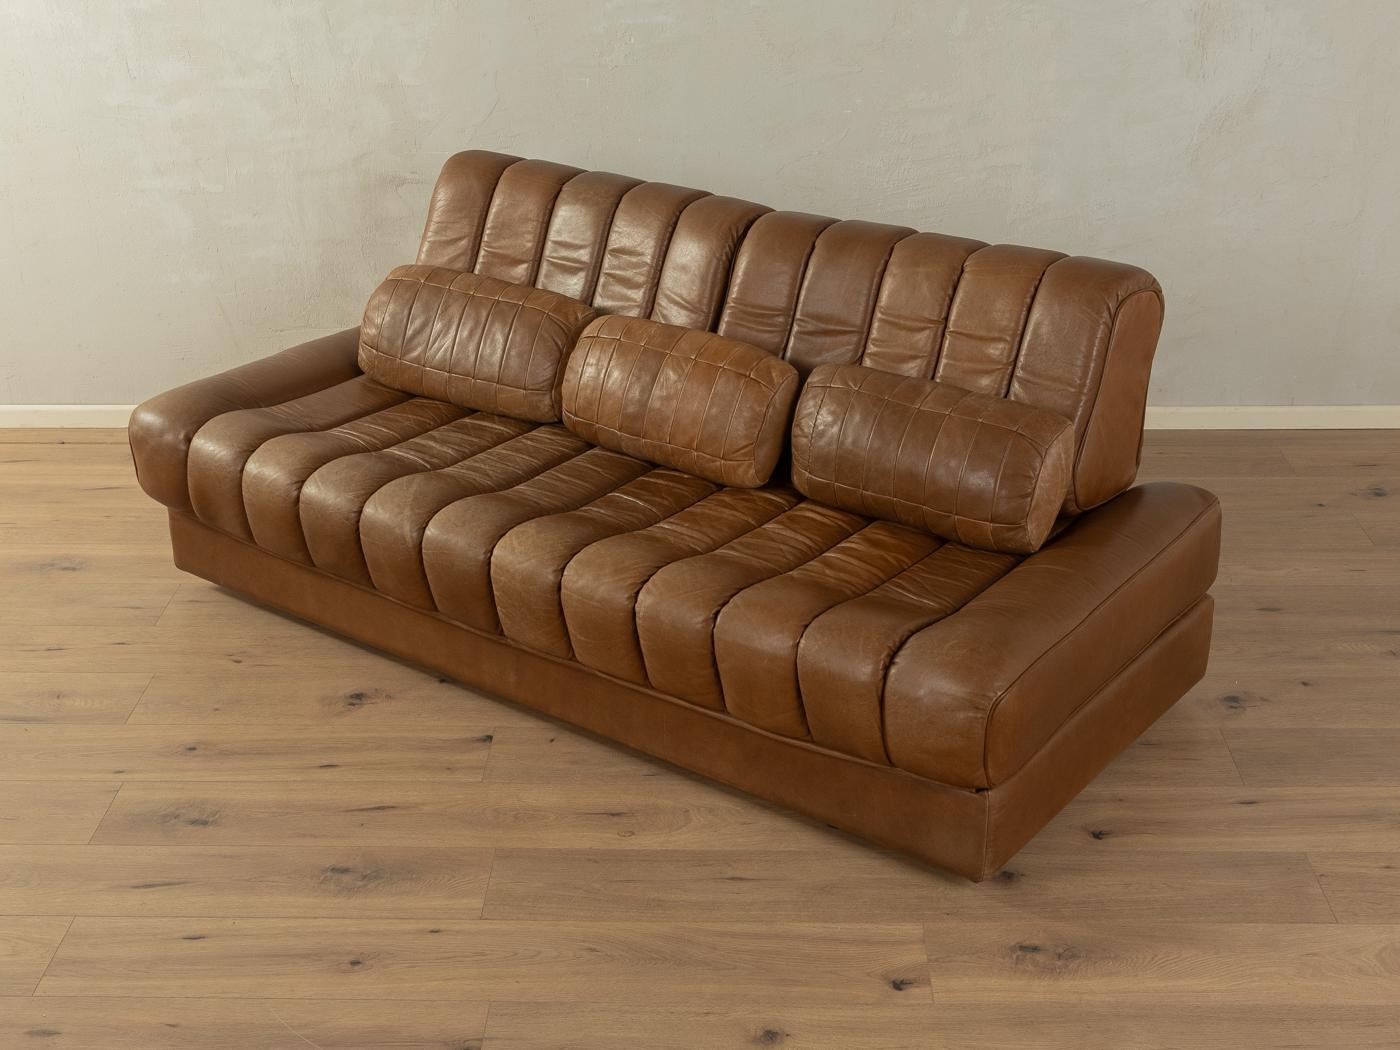 Leather  Convertible sofa, de Sede, DS-85 